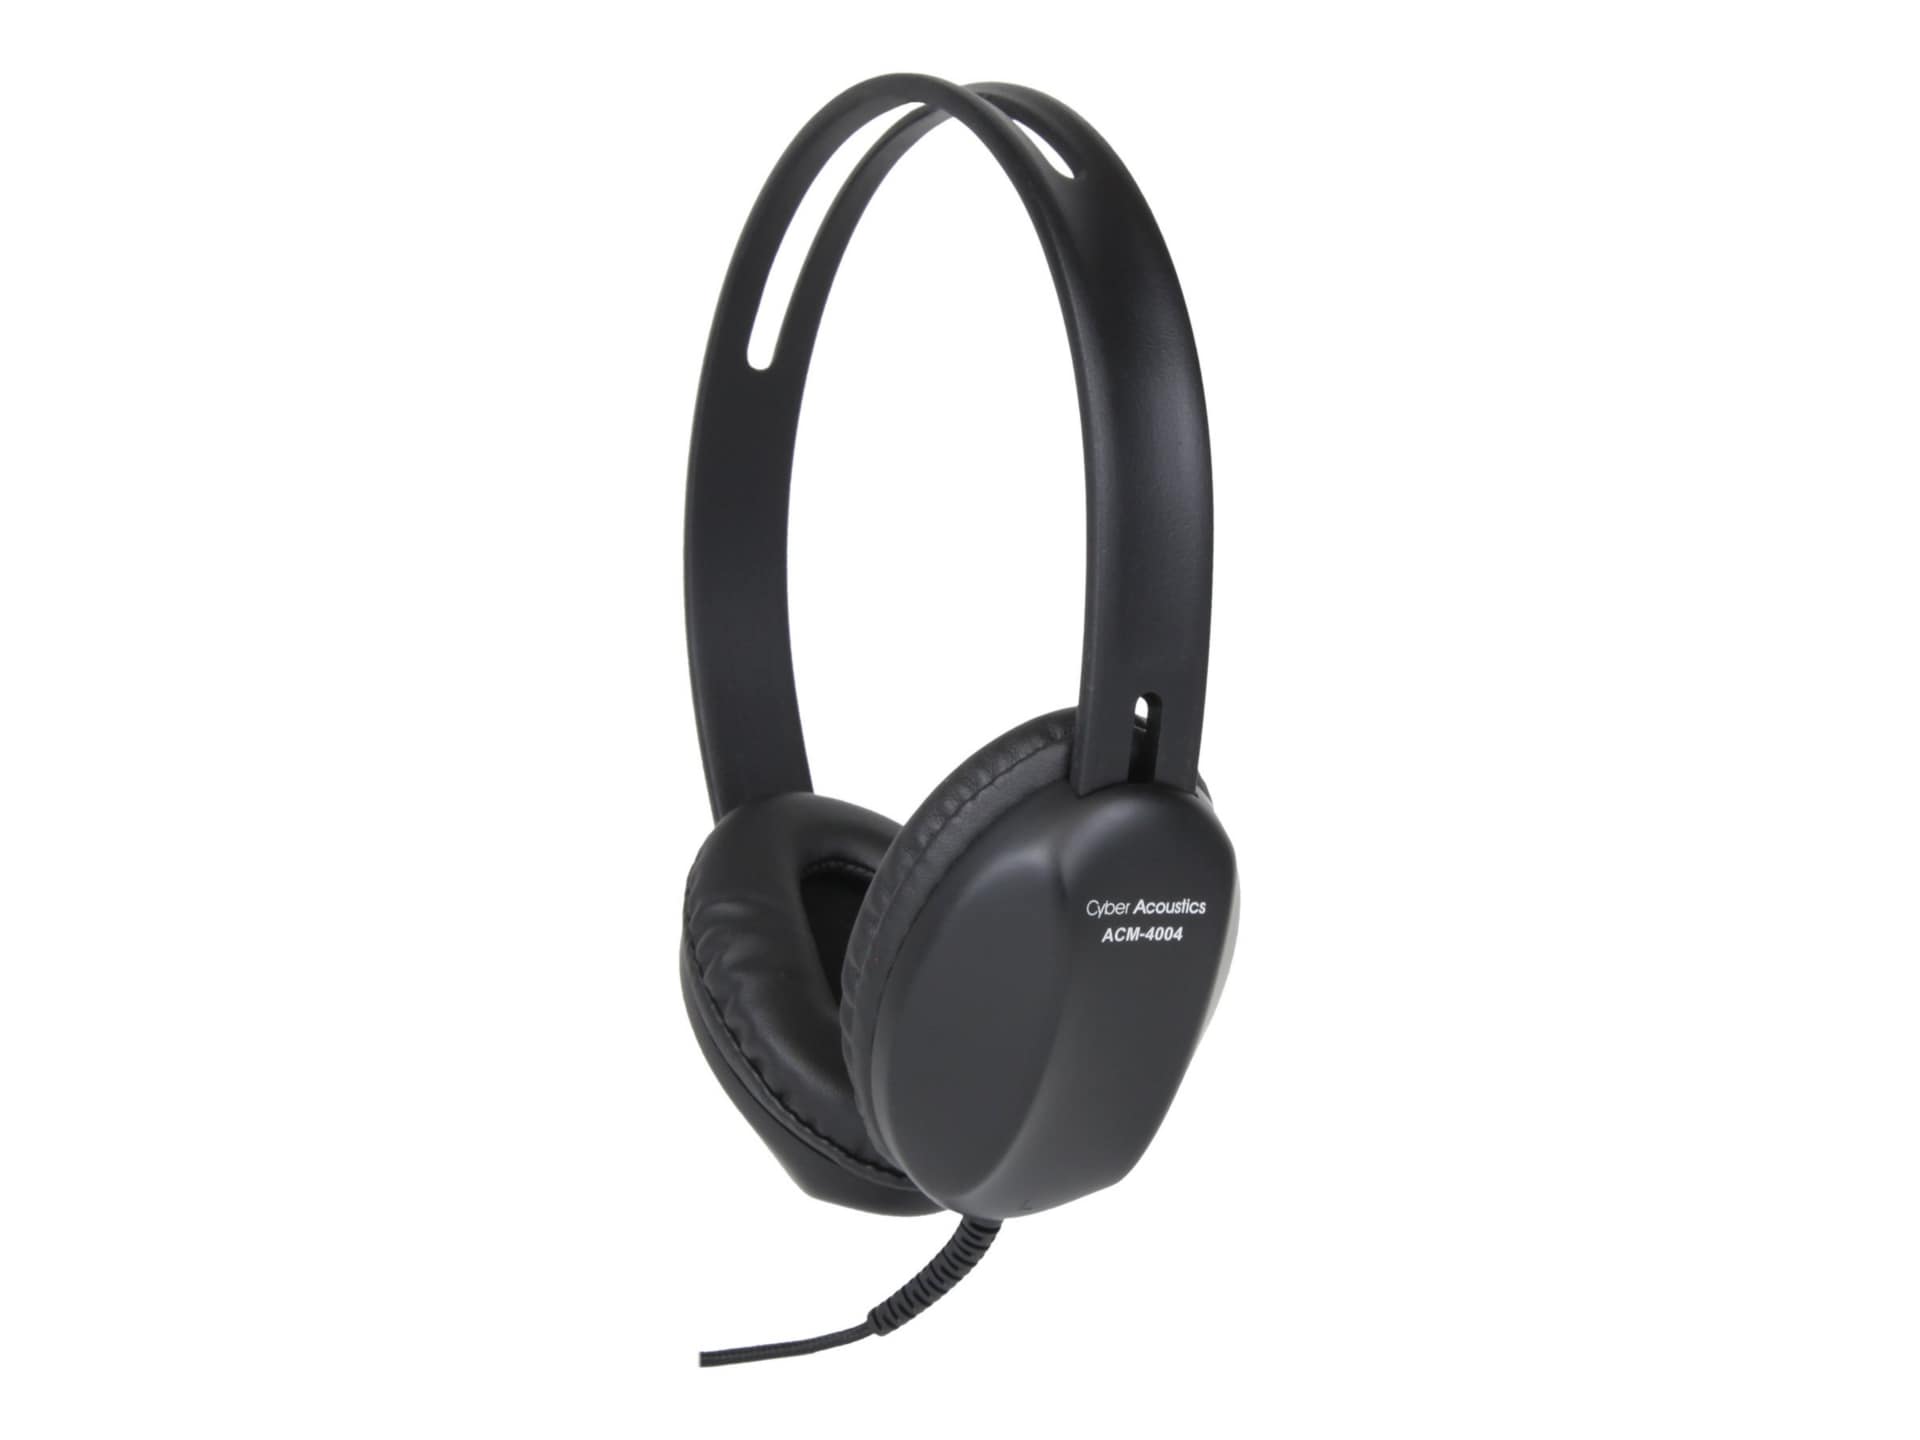 Cyber Acoustics ACM 4004 - headphones